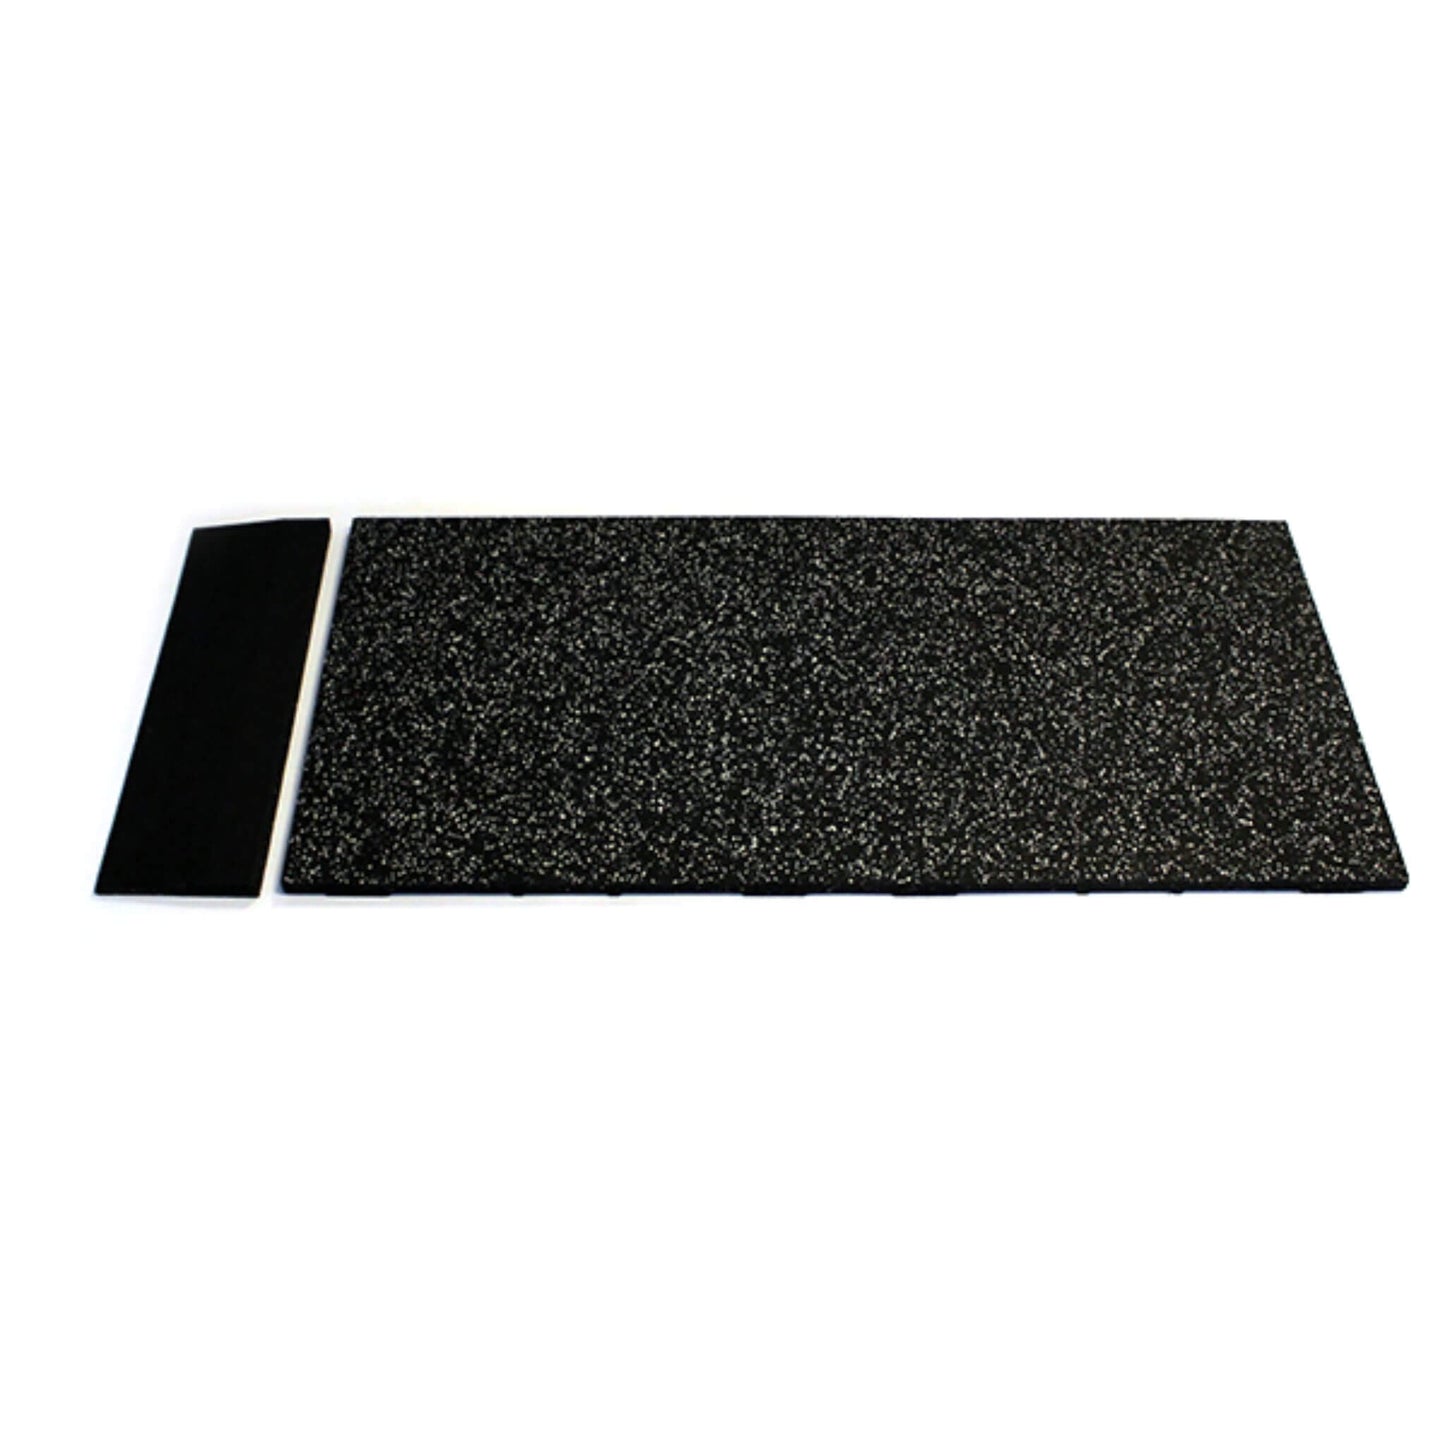 20mm Premium Black Rubber Gym Floor Tile (1m x 0.5m / Grey Fleck) ramped edge